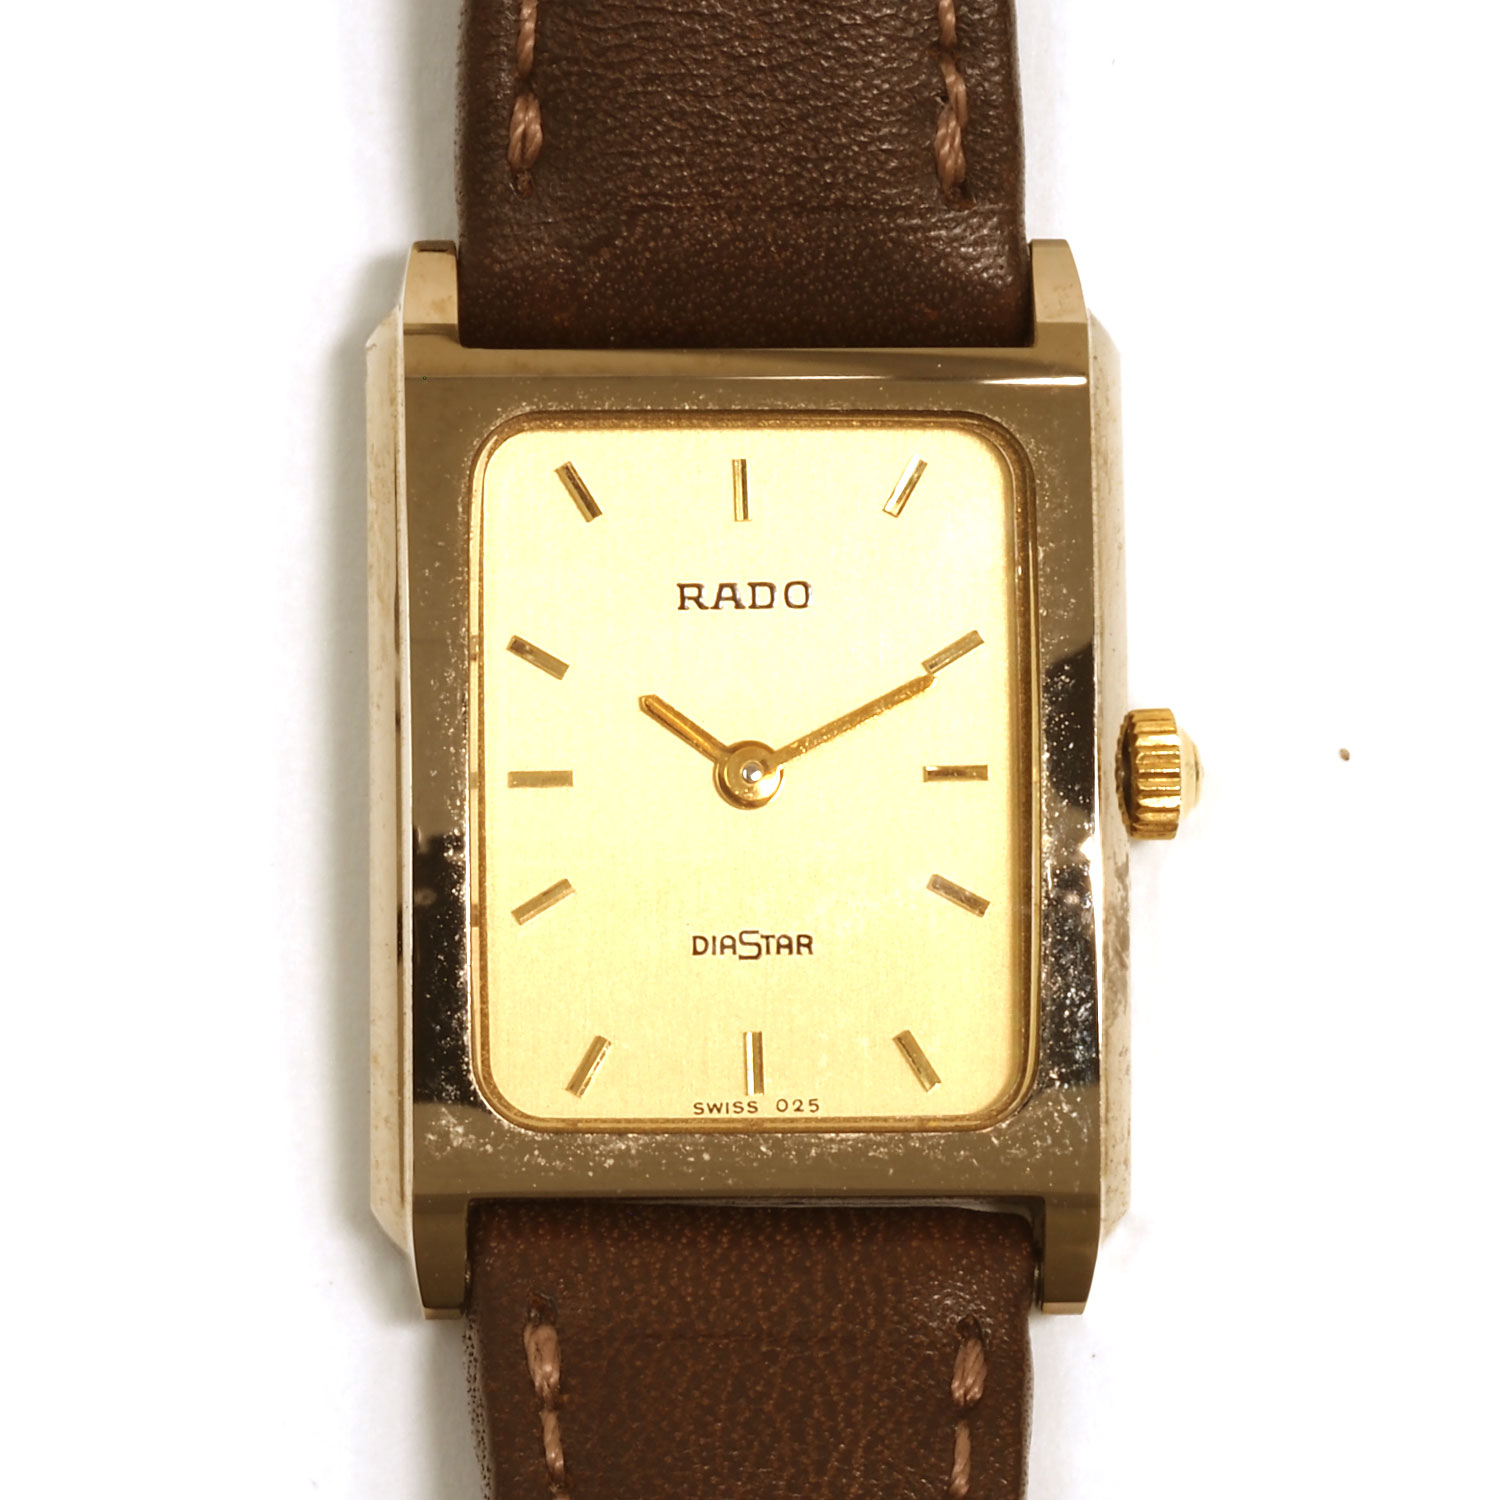 Used Rado quartz watch ($24) for sale - Timepeaks